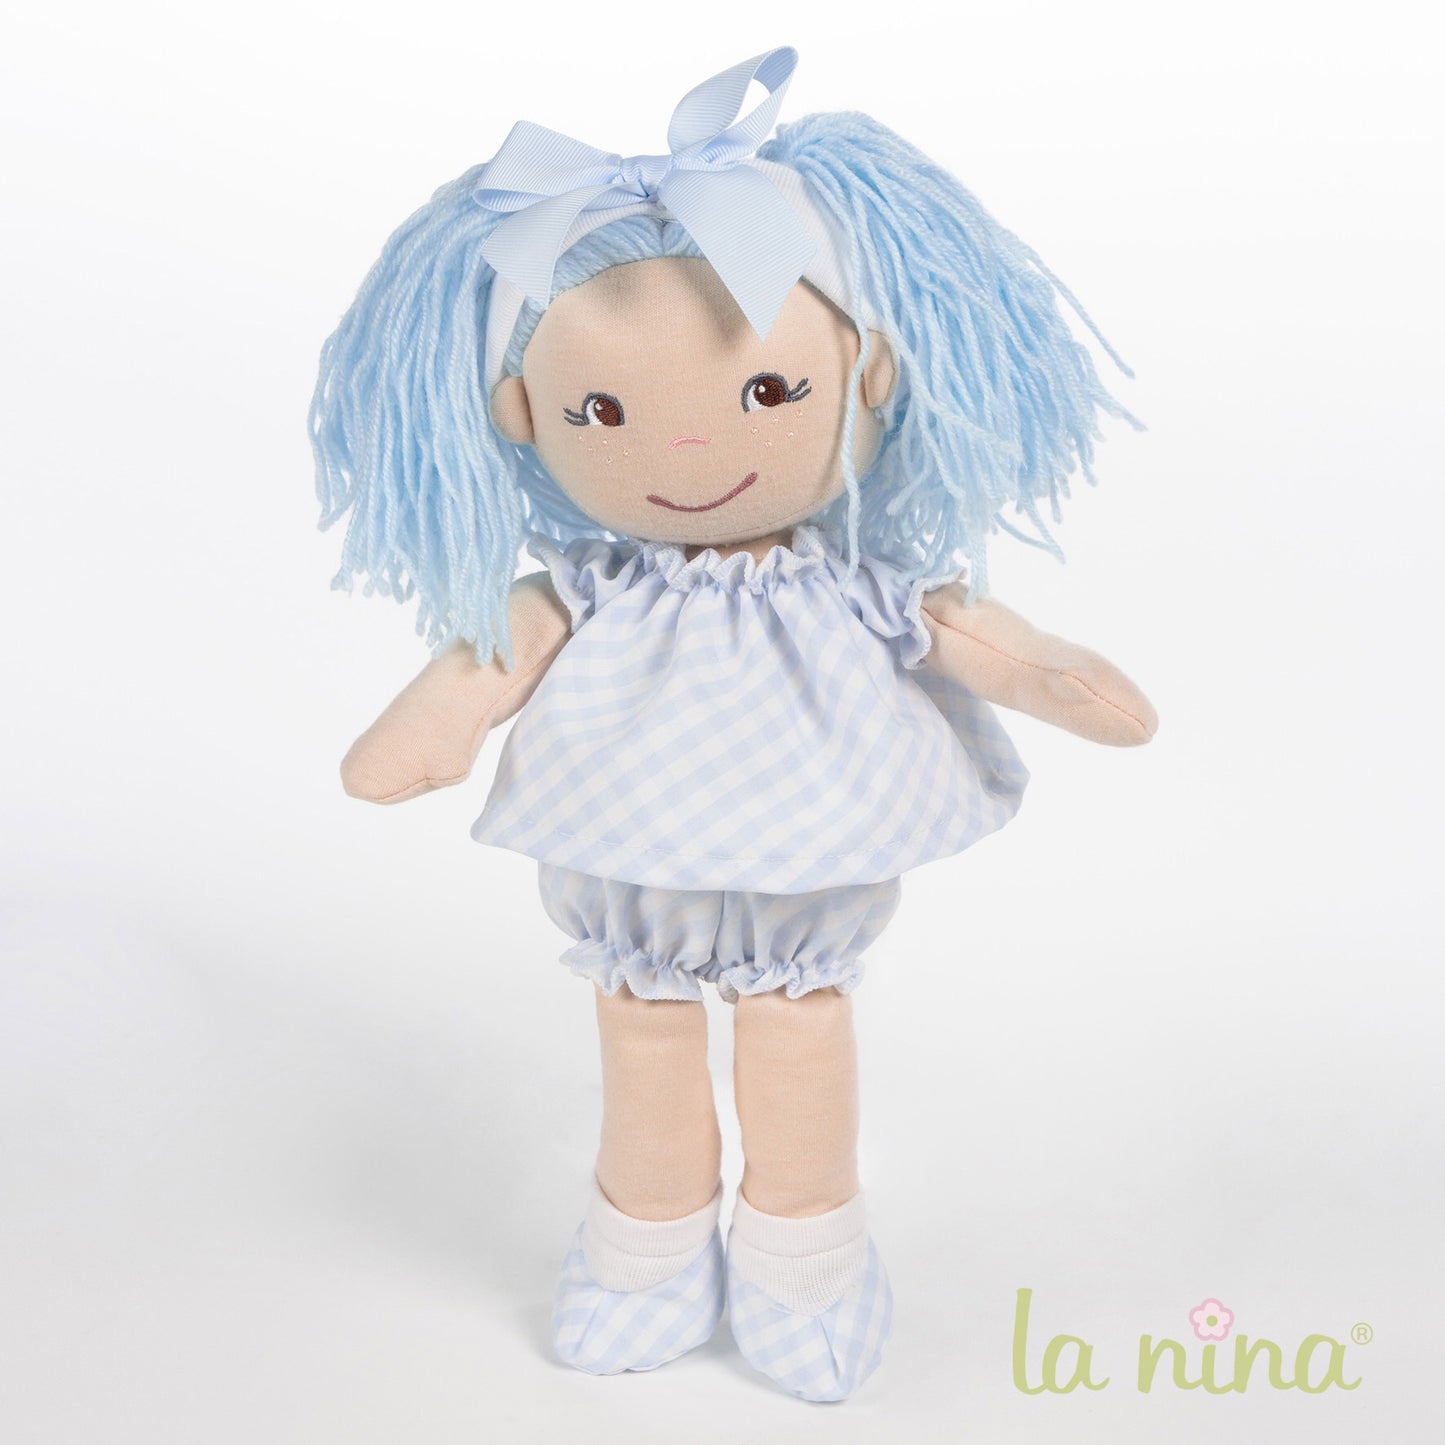 LA NINA Cristina Doll - Blue